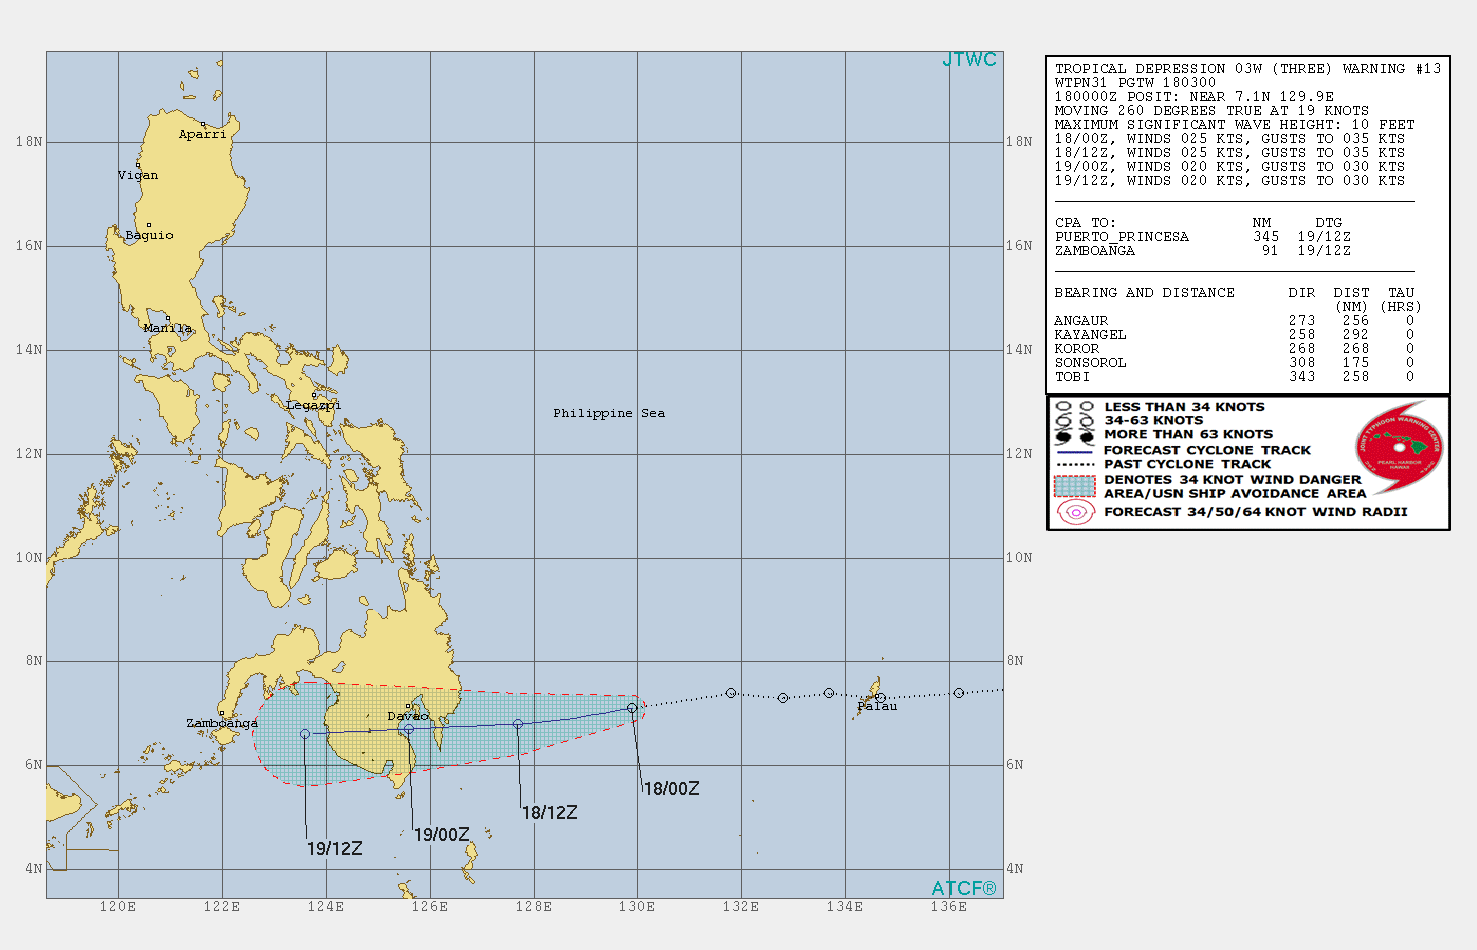 WARNING 13/JTWC